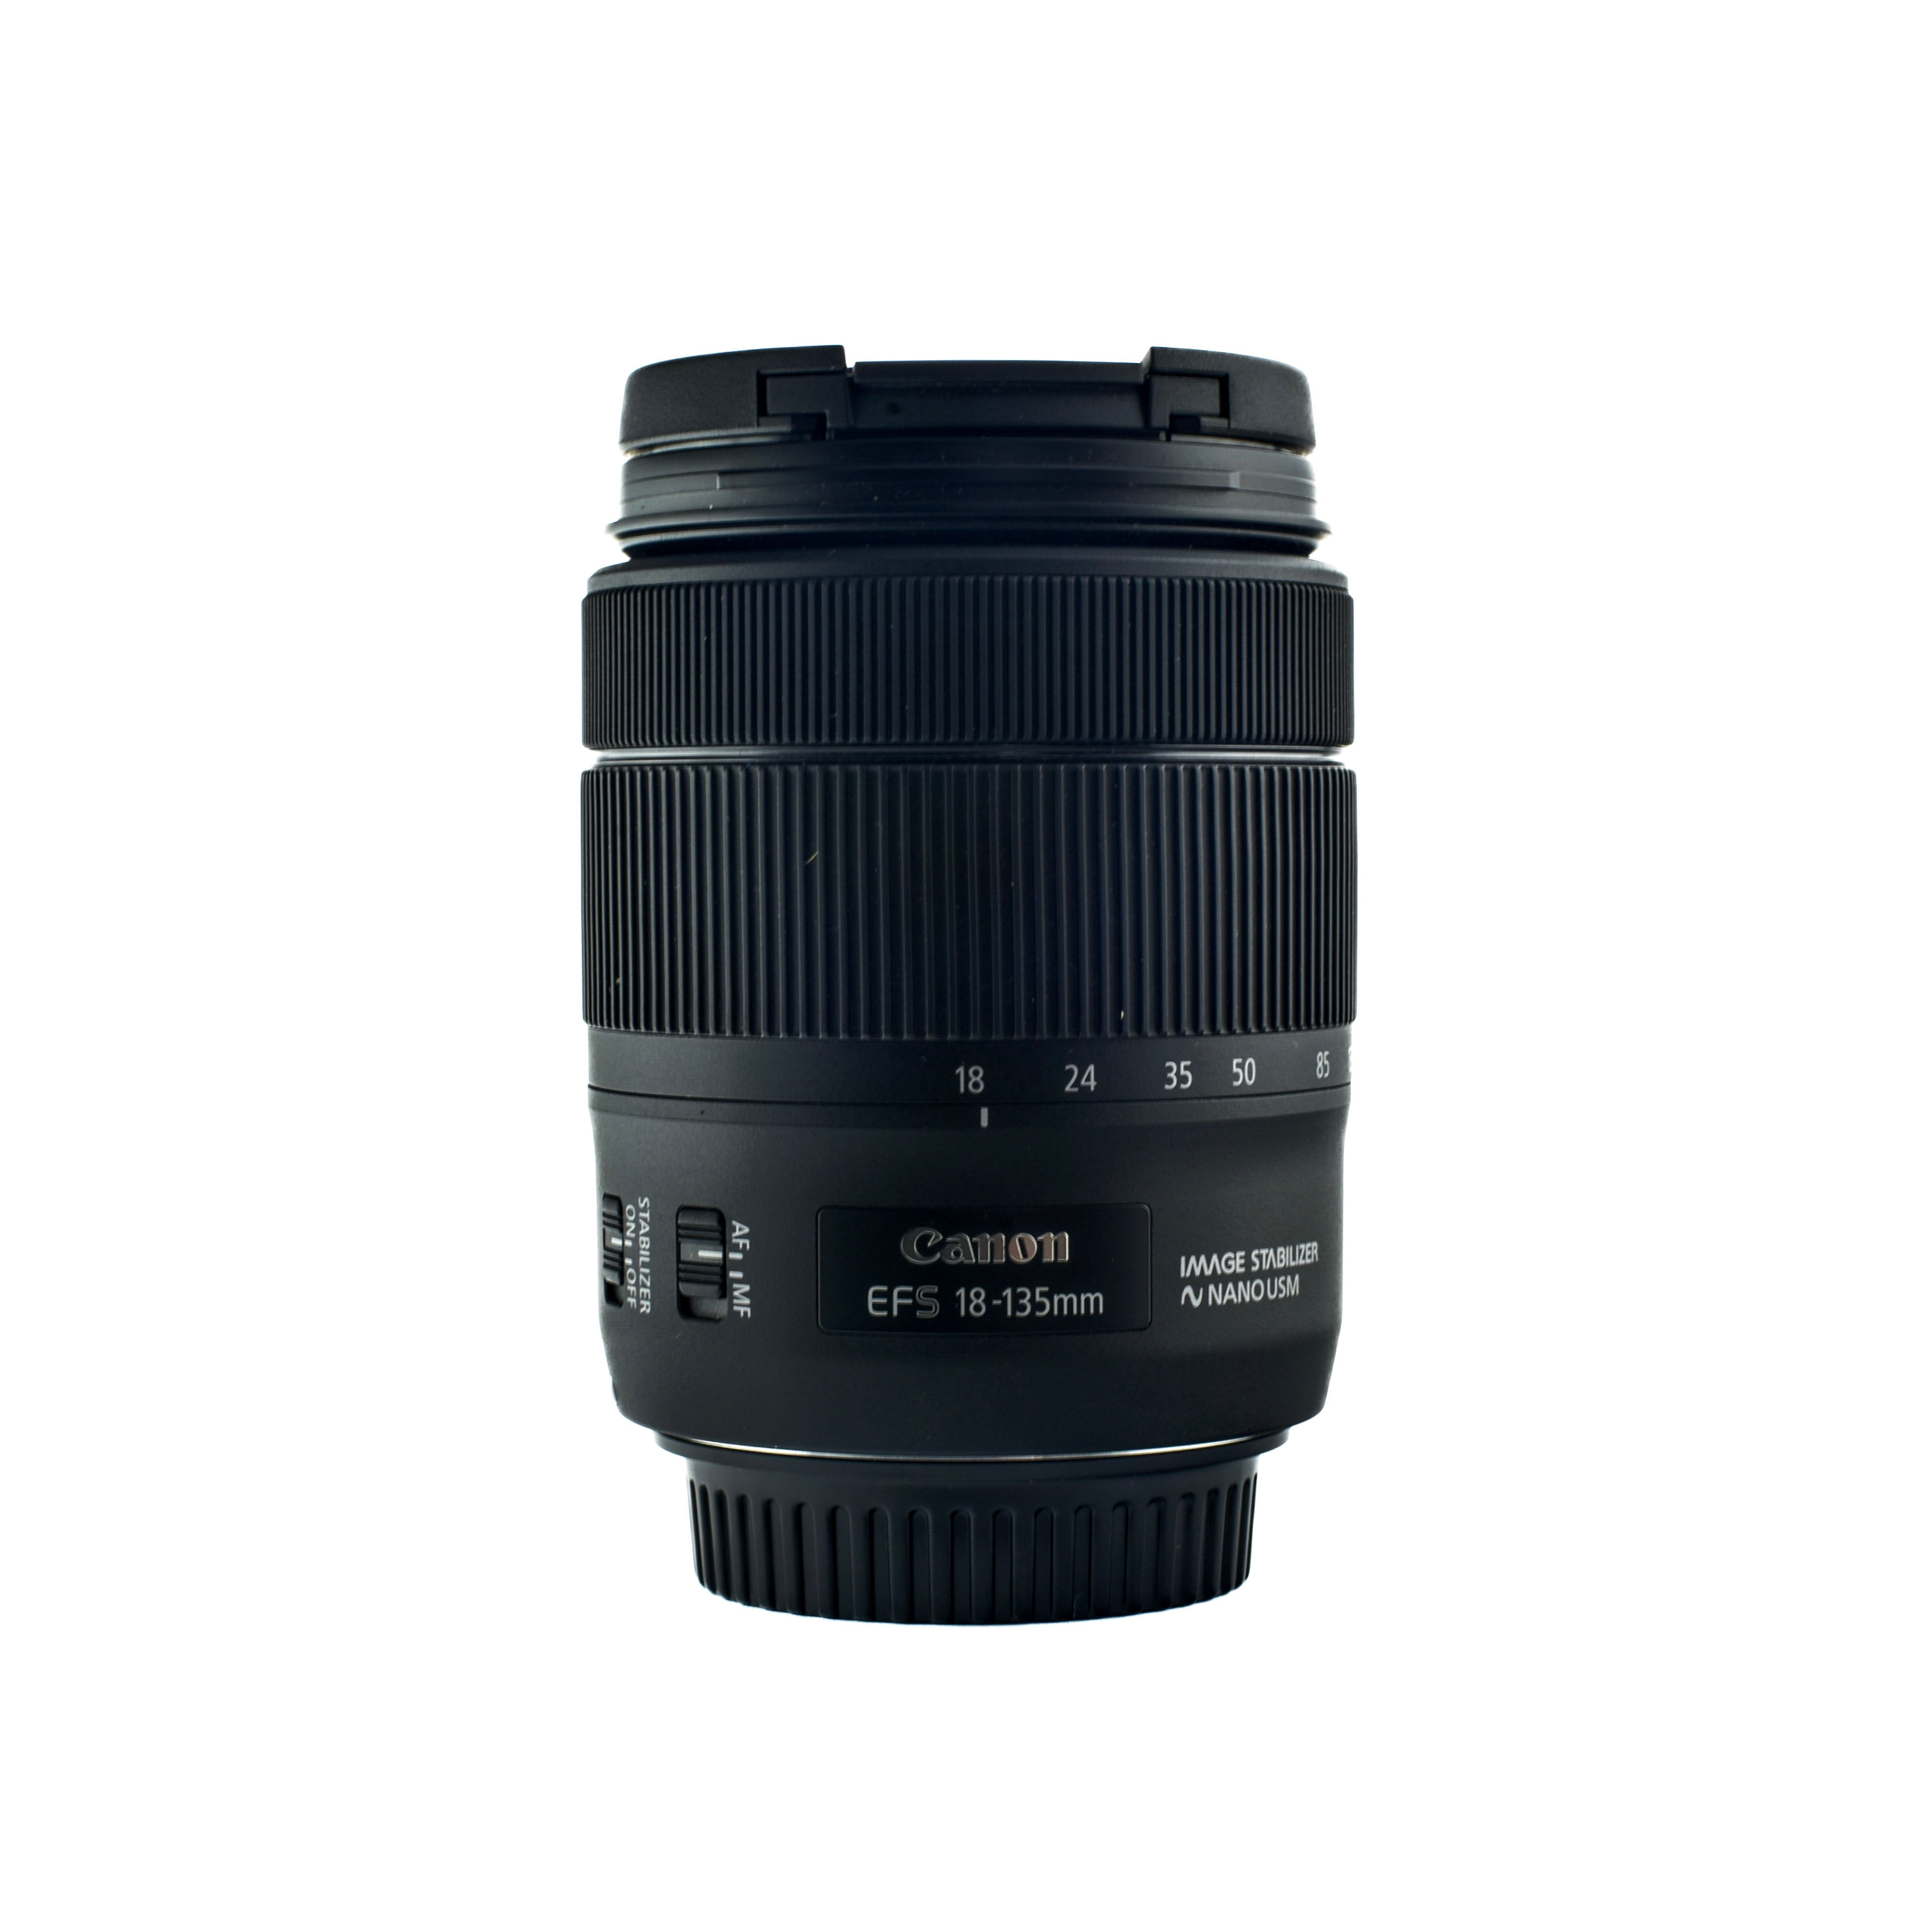 Canon EF-S 18-135mm f/3.5-5.6 IS USM wide tele zoom lens